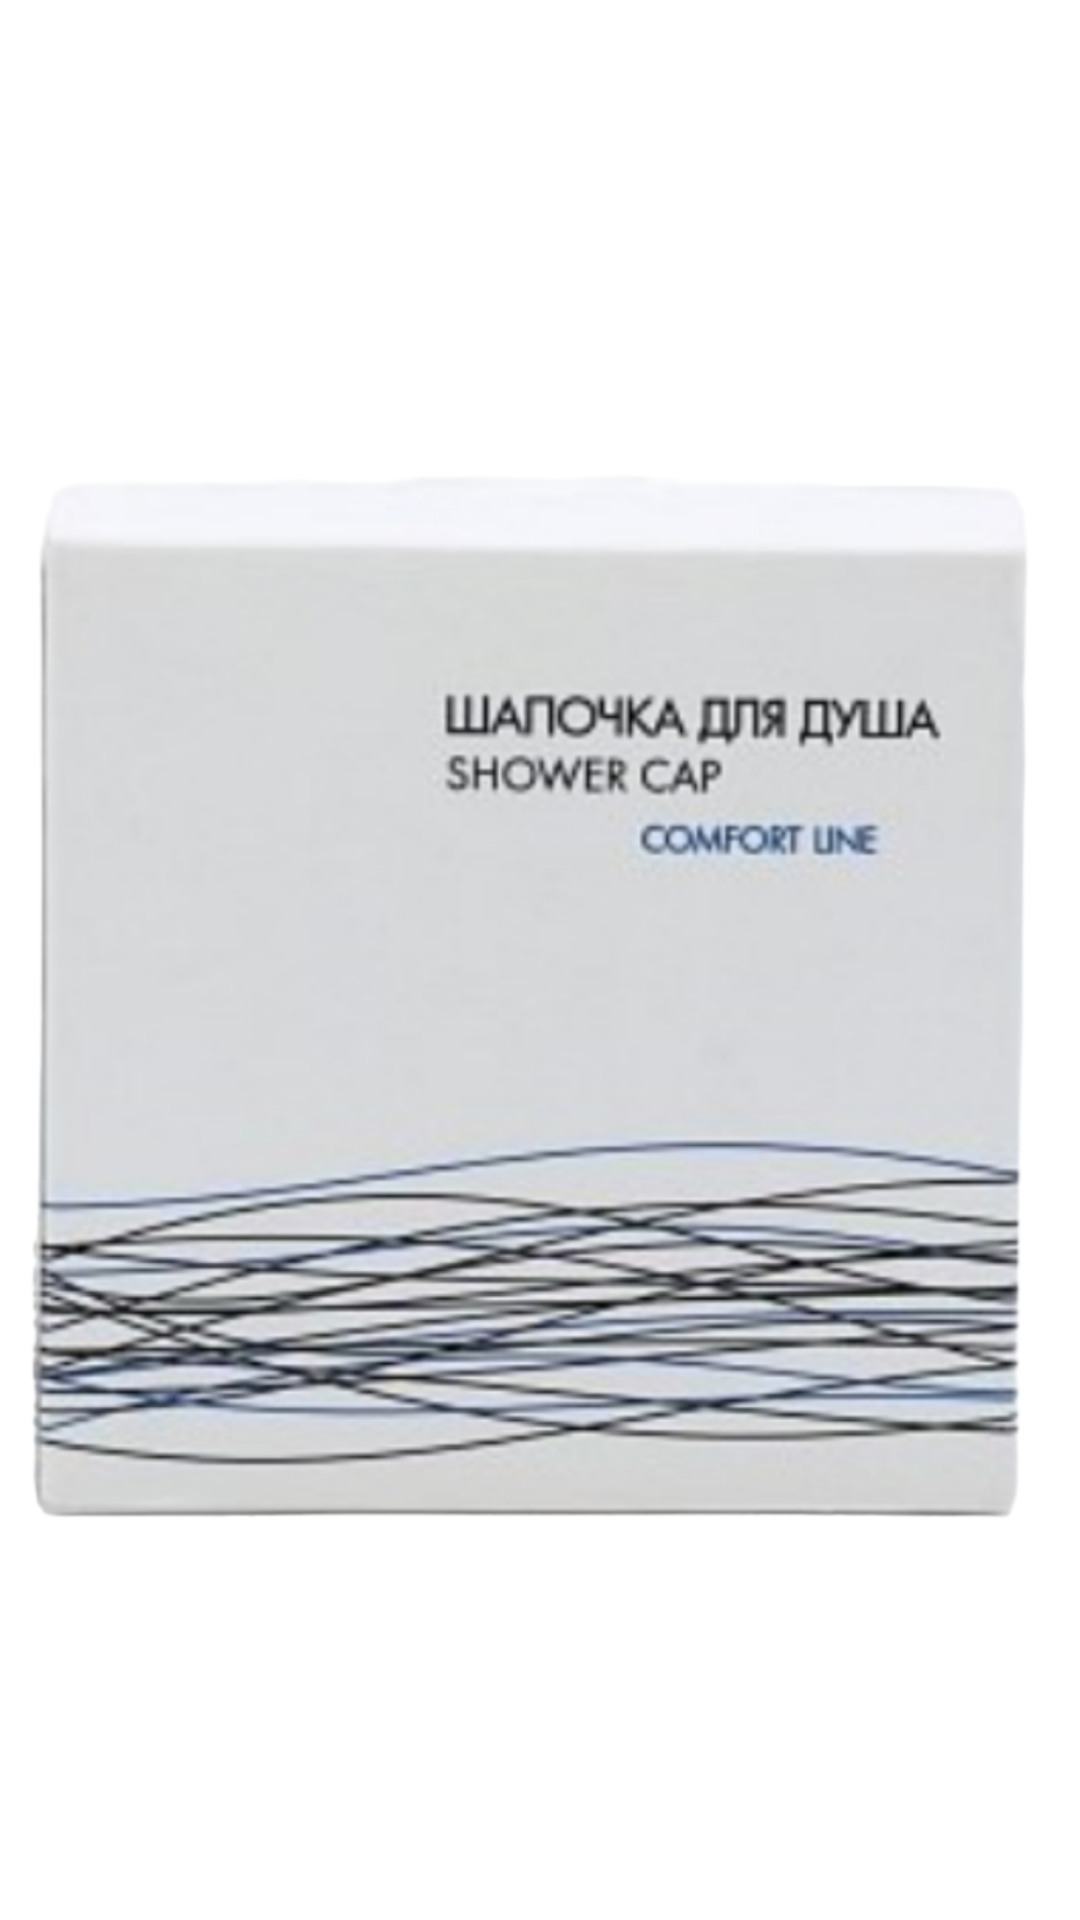 Шапочки для душа Comfort Line картон 250 шт набор парикмахерских ножниц easy step dewal